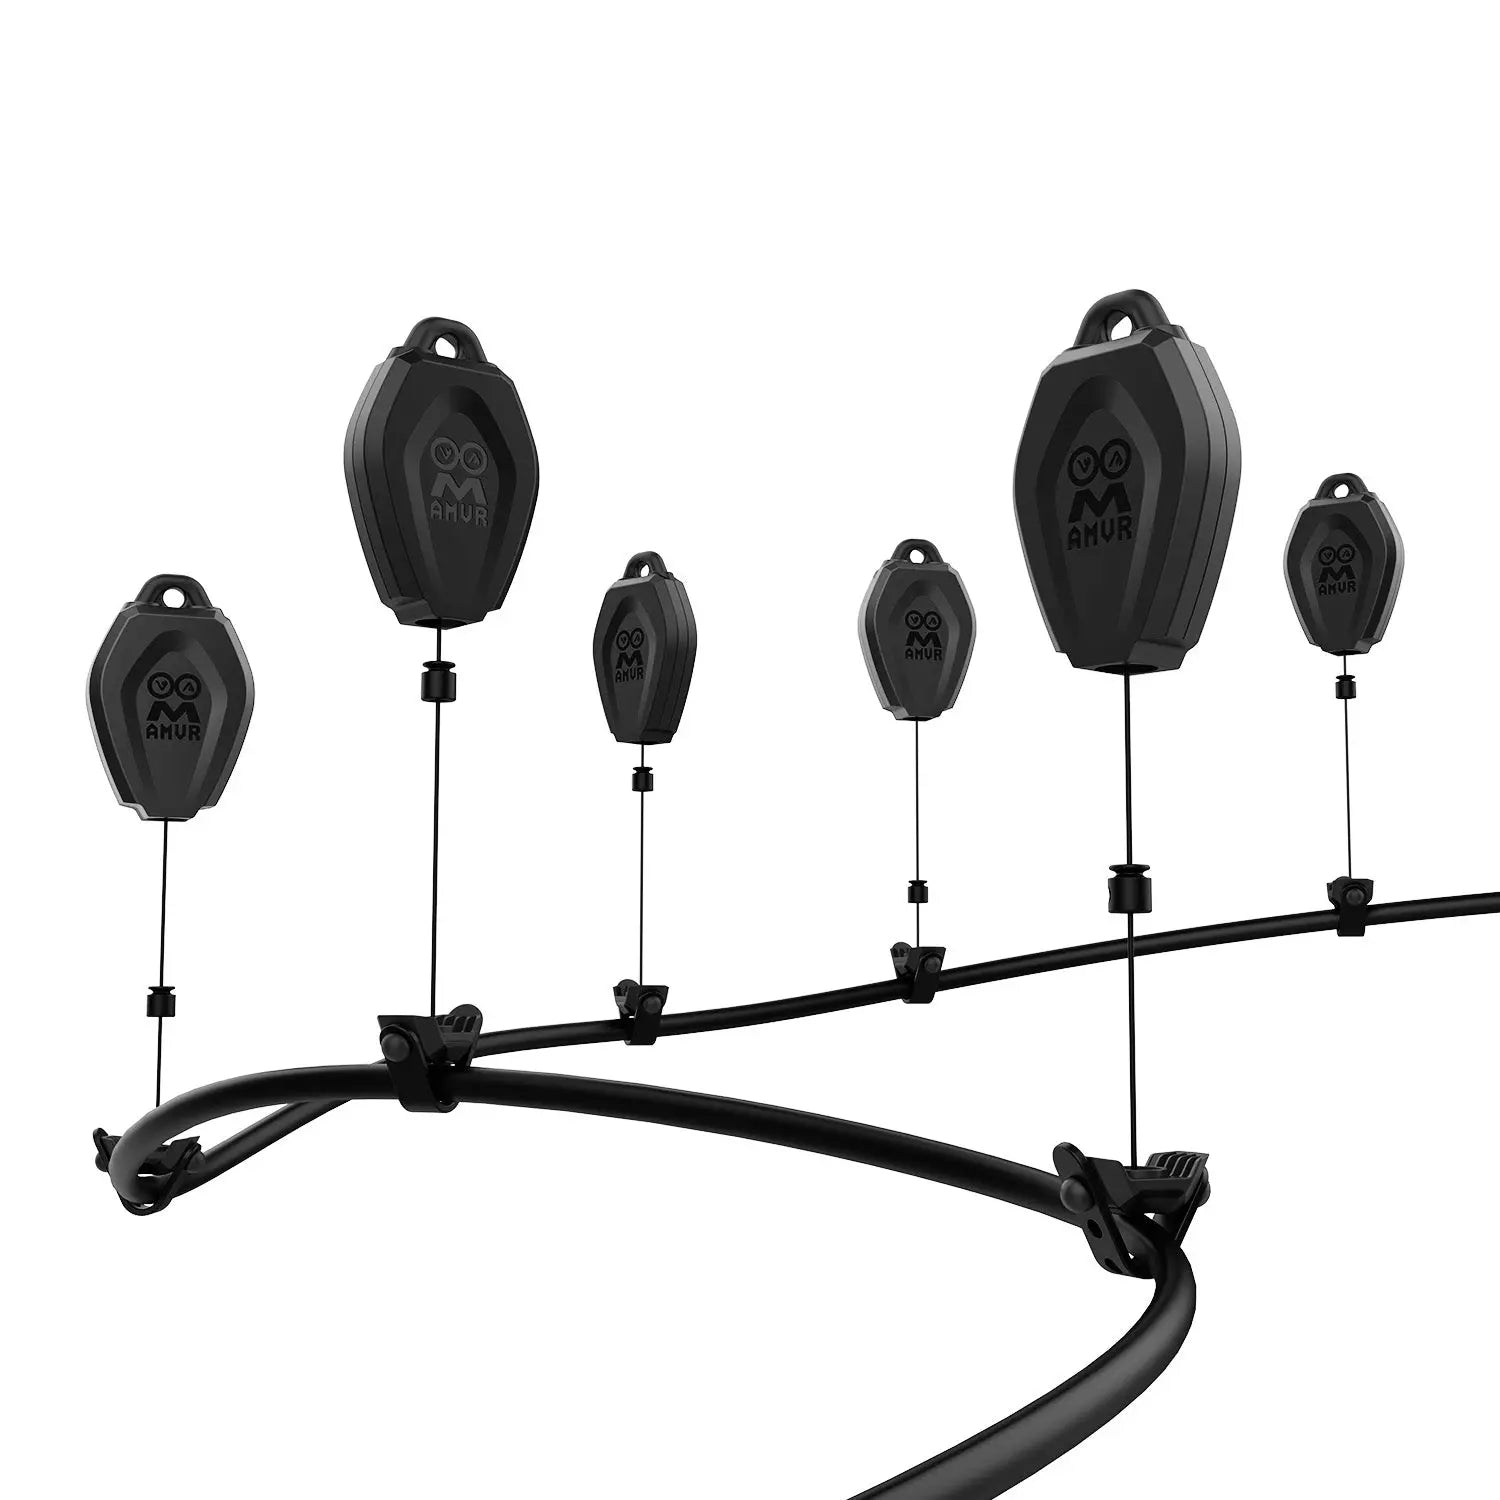 AMVR VR Cable Management Pulley System AMVRSHOP